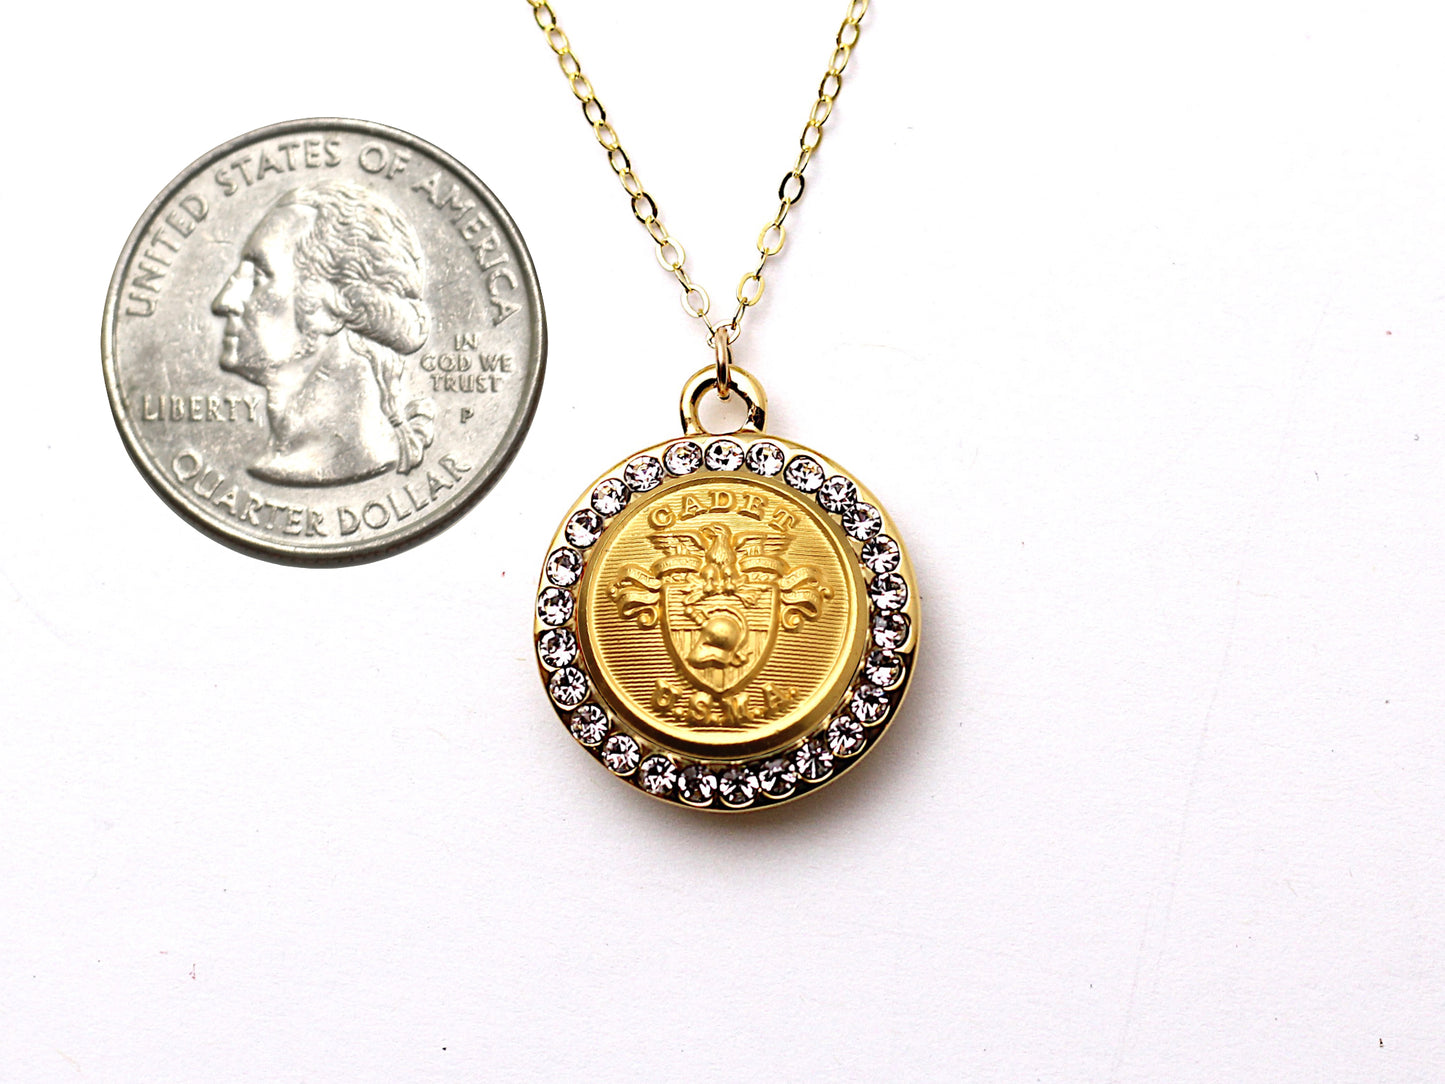 U.S. Military Academy Button Necklace - Small Rhinestone Gold Pendant